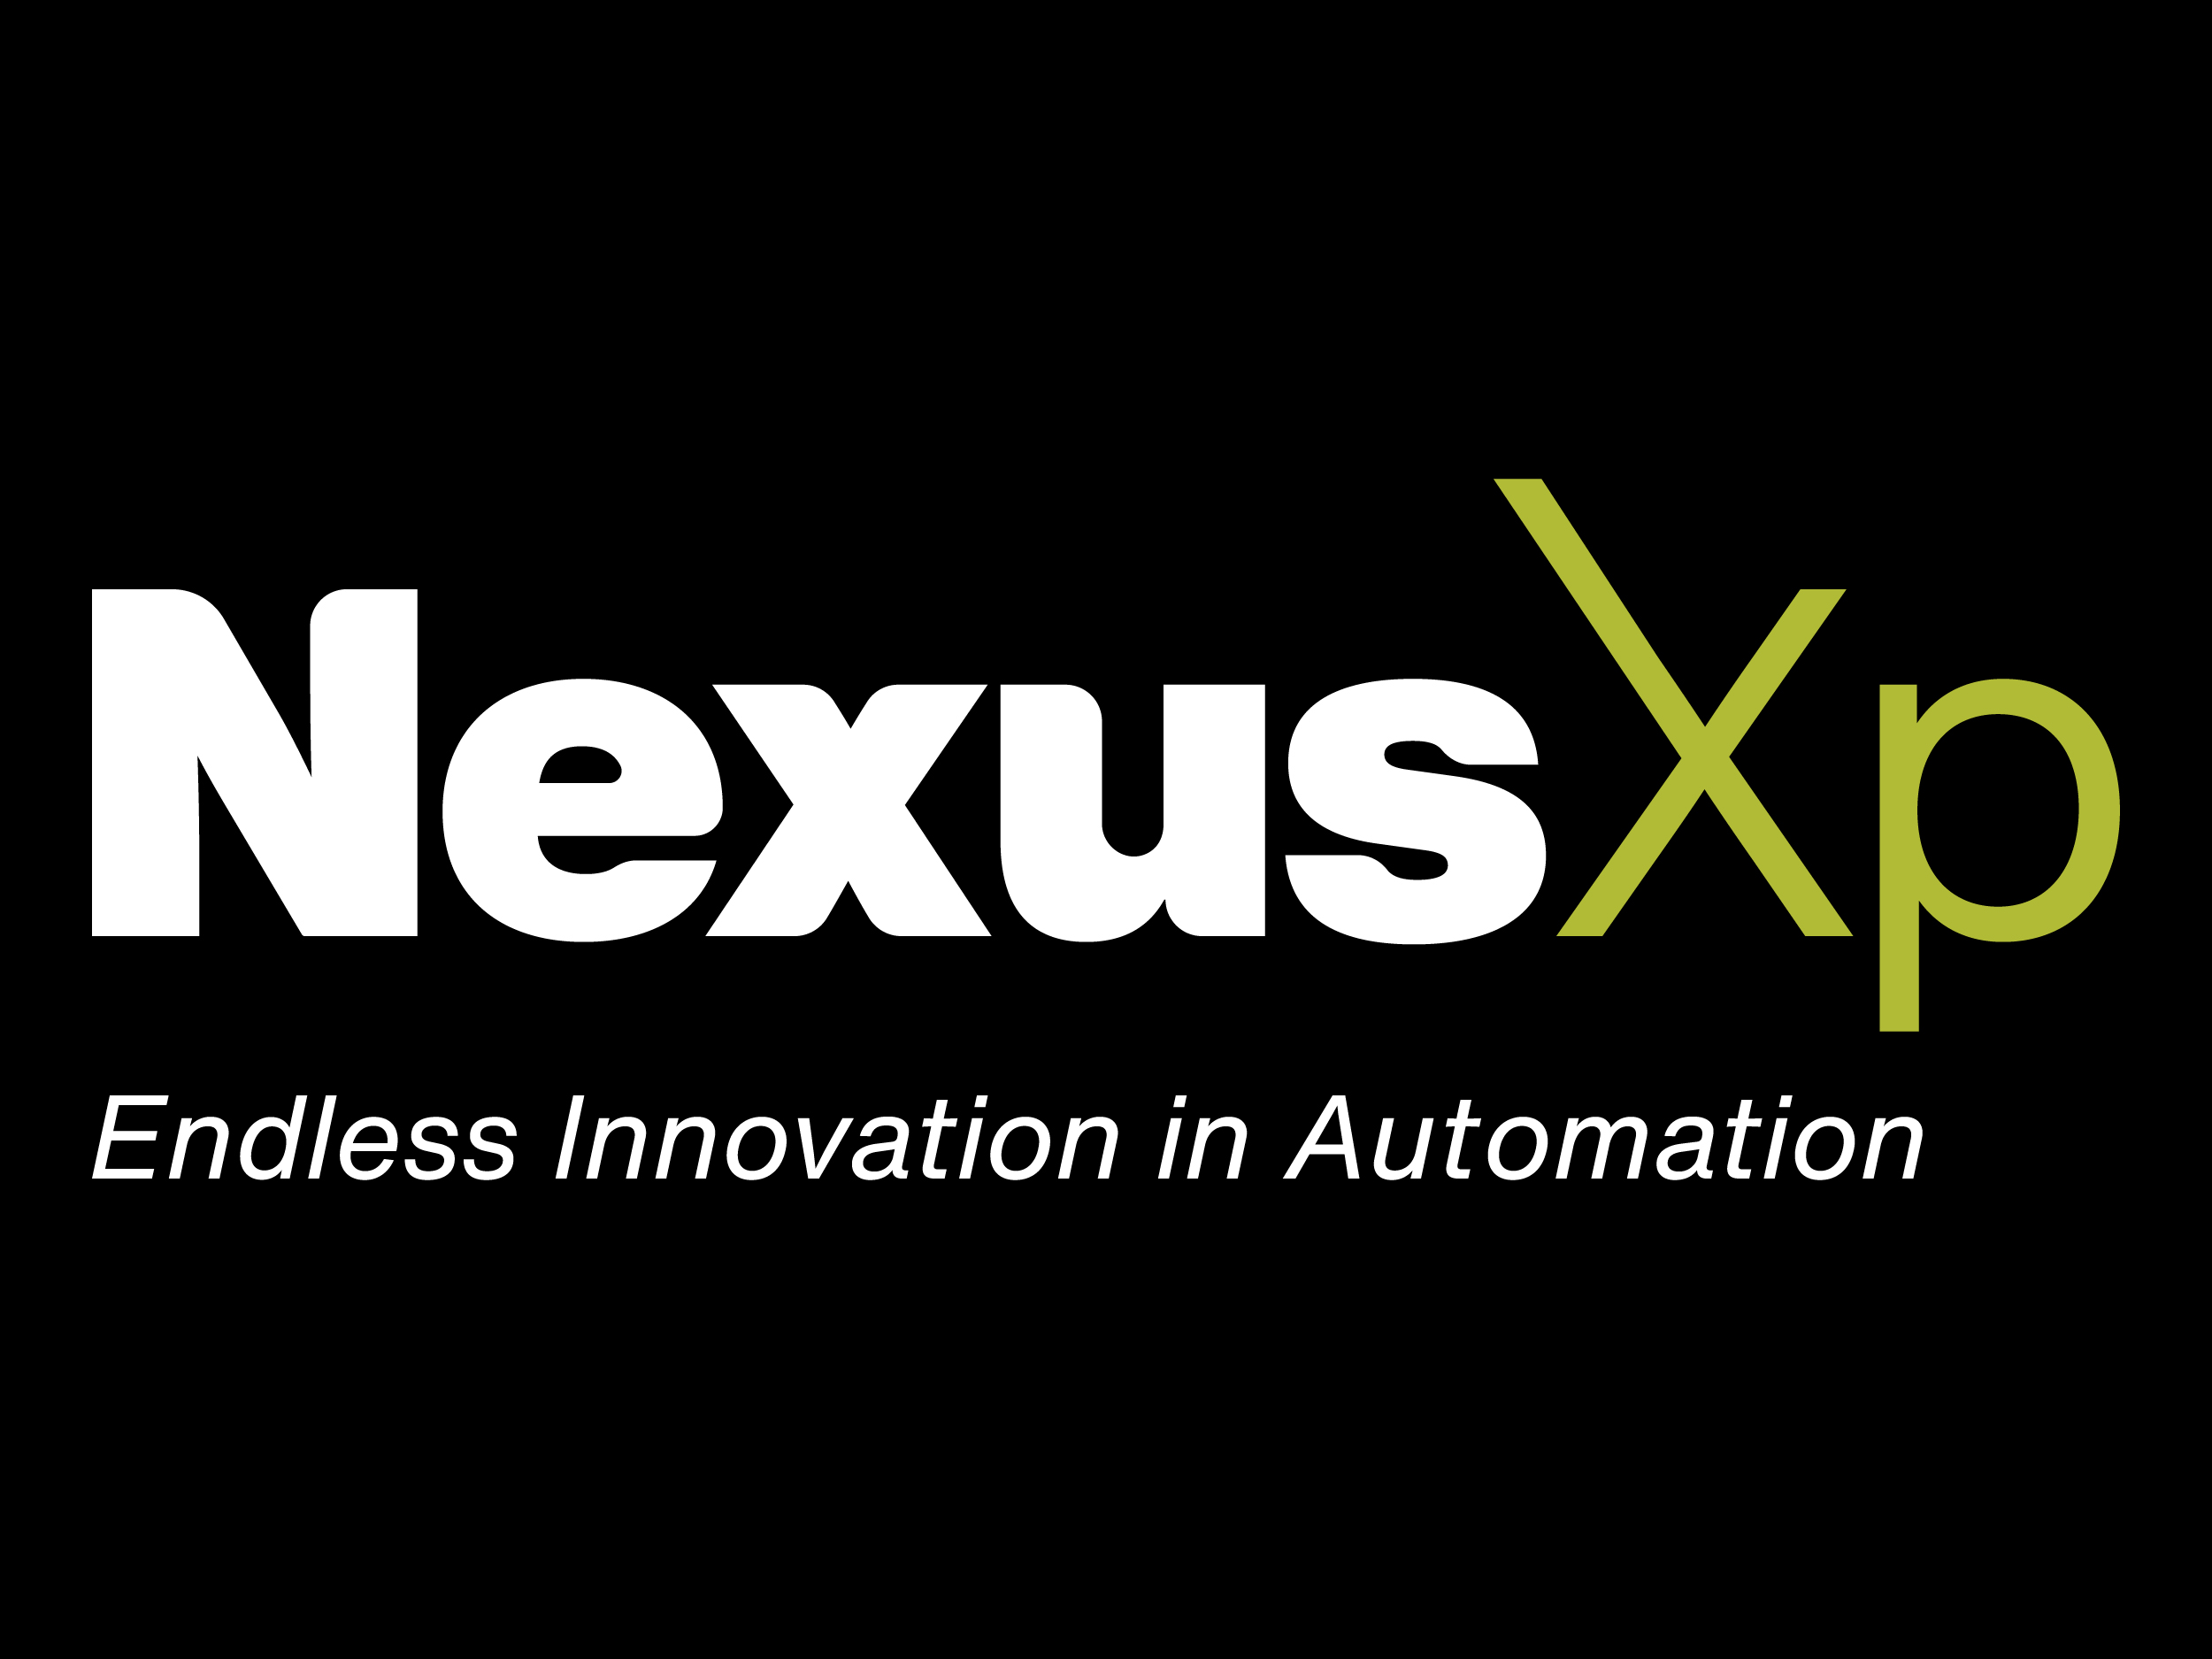 NexusXP logo